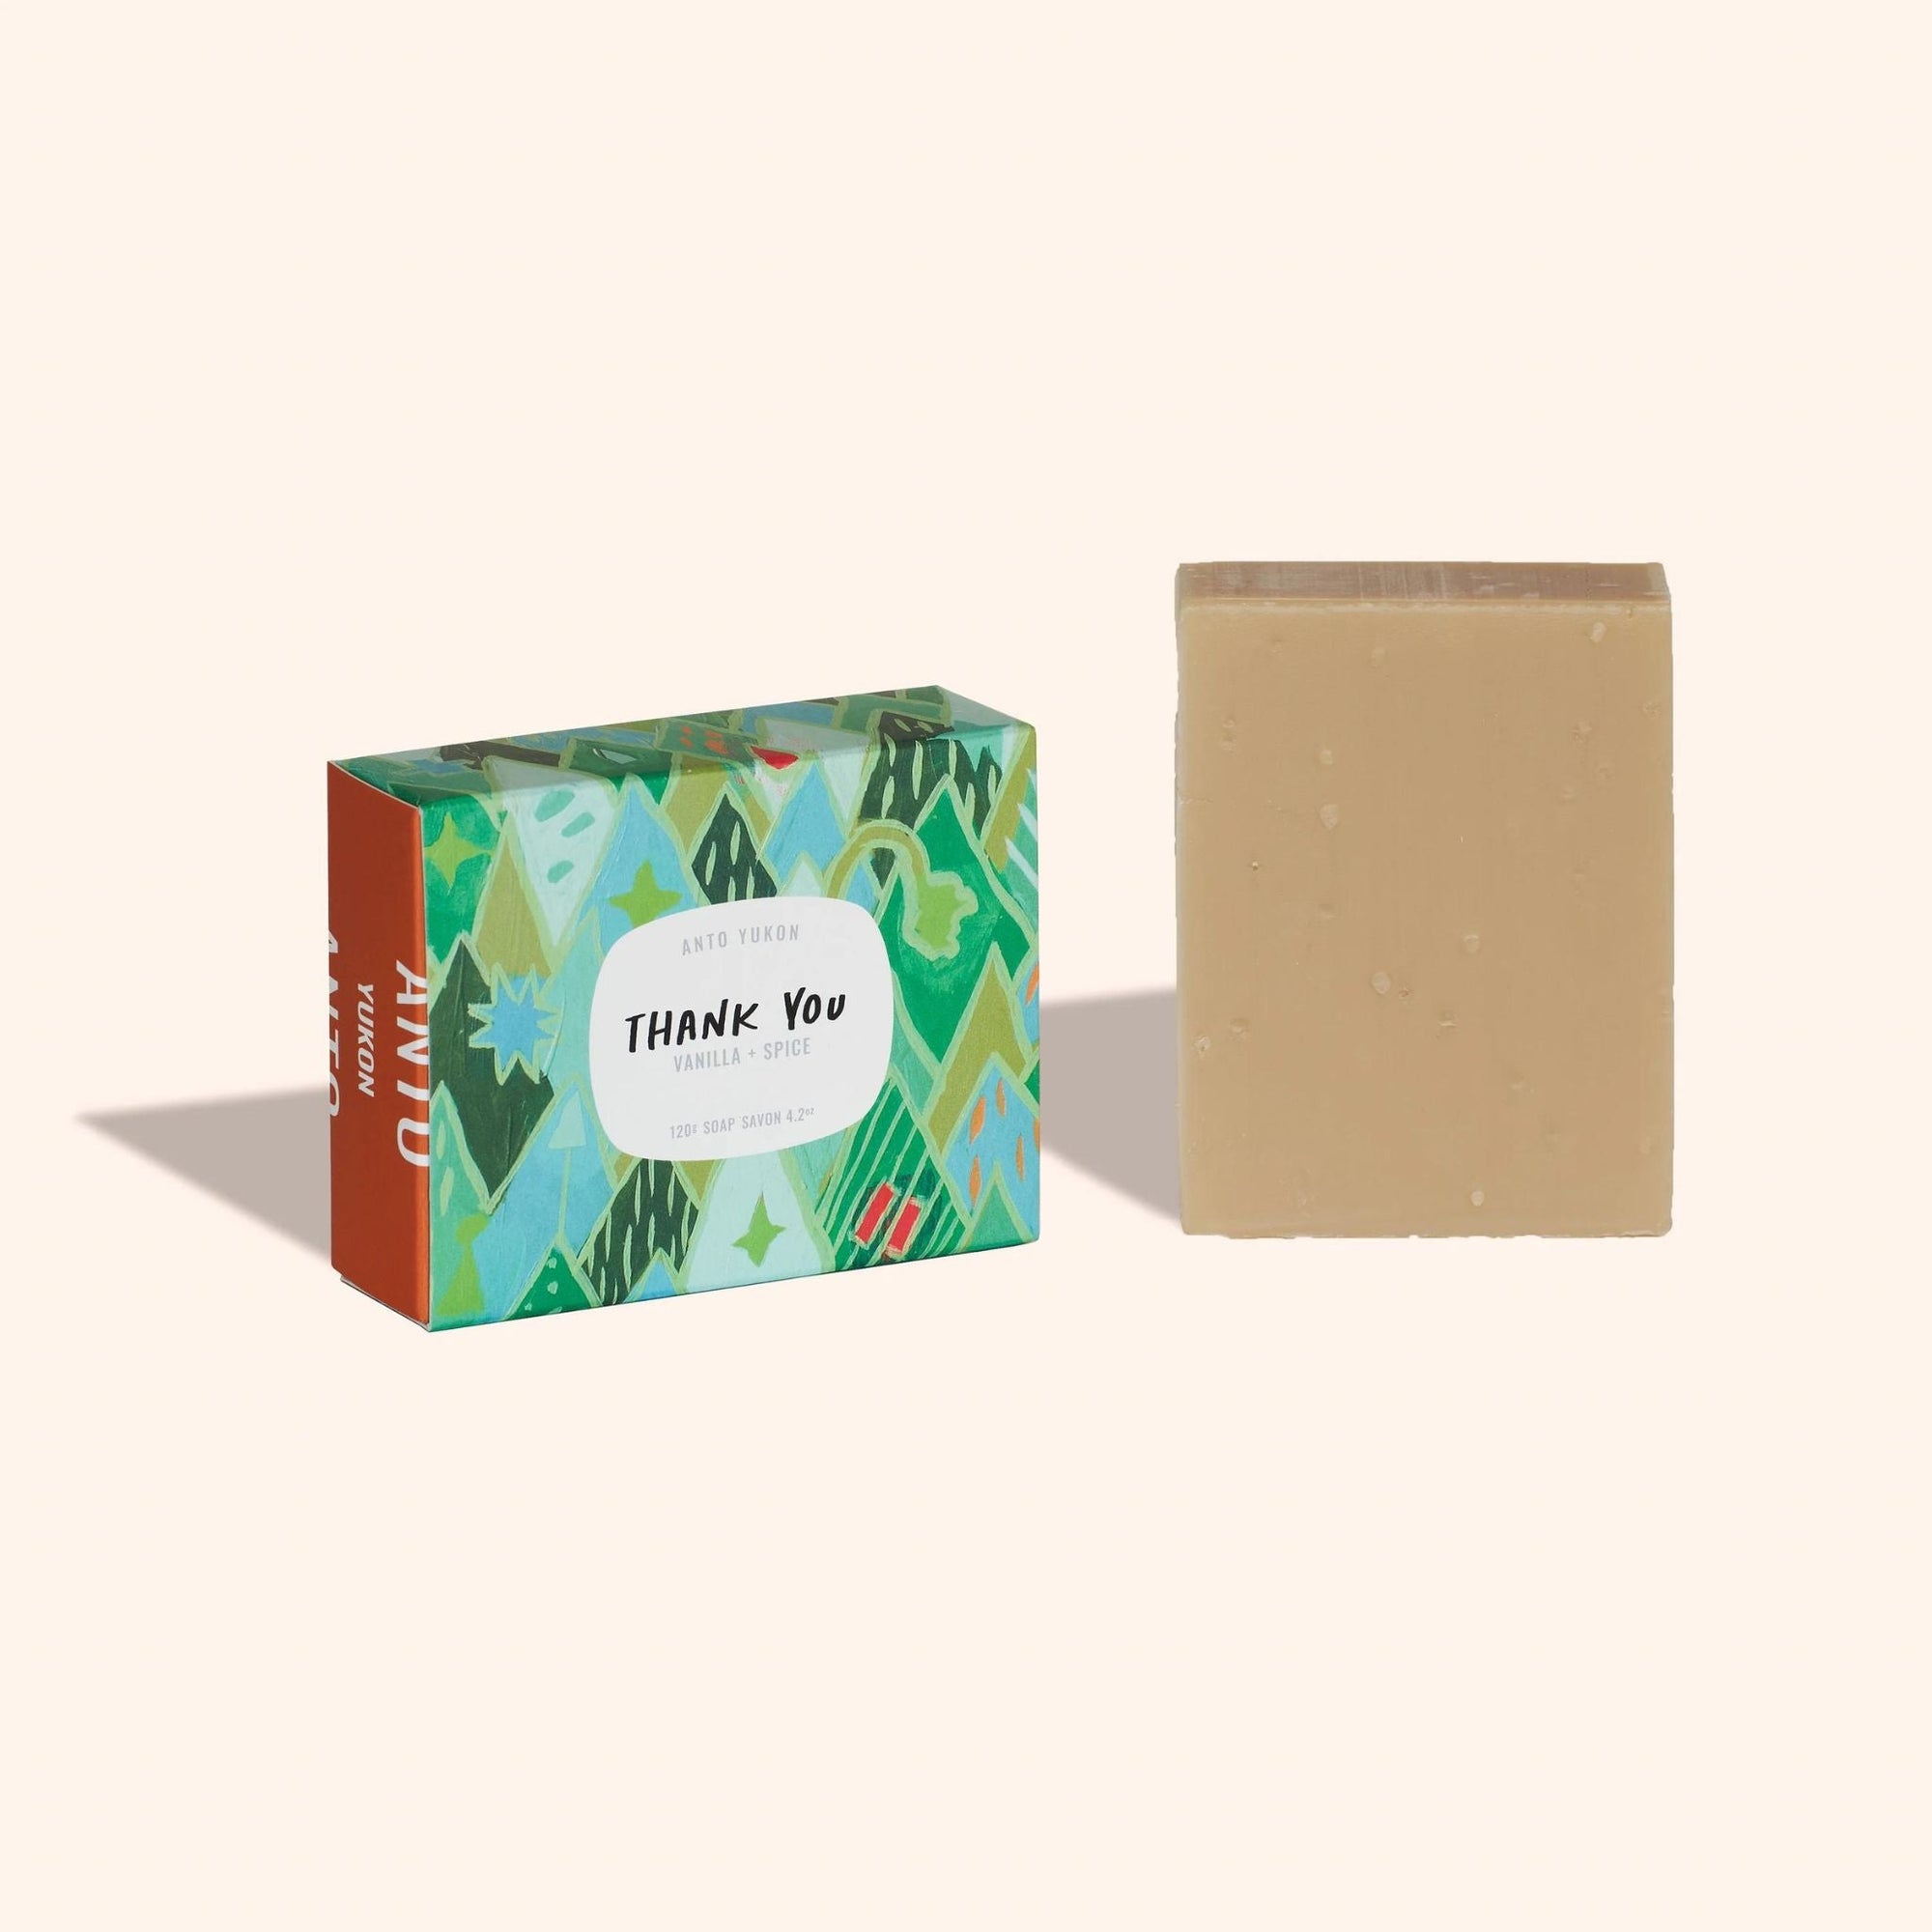 Anto Yukon - Anto Yukon Thank You Vanilla + Spice Soap - ORESTA clean beauty simplified